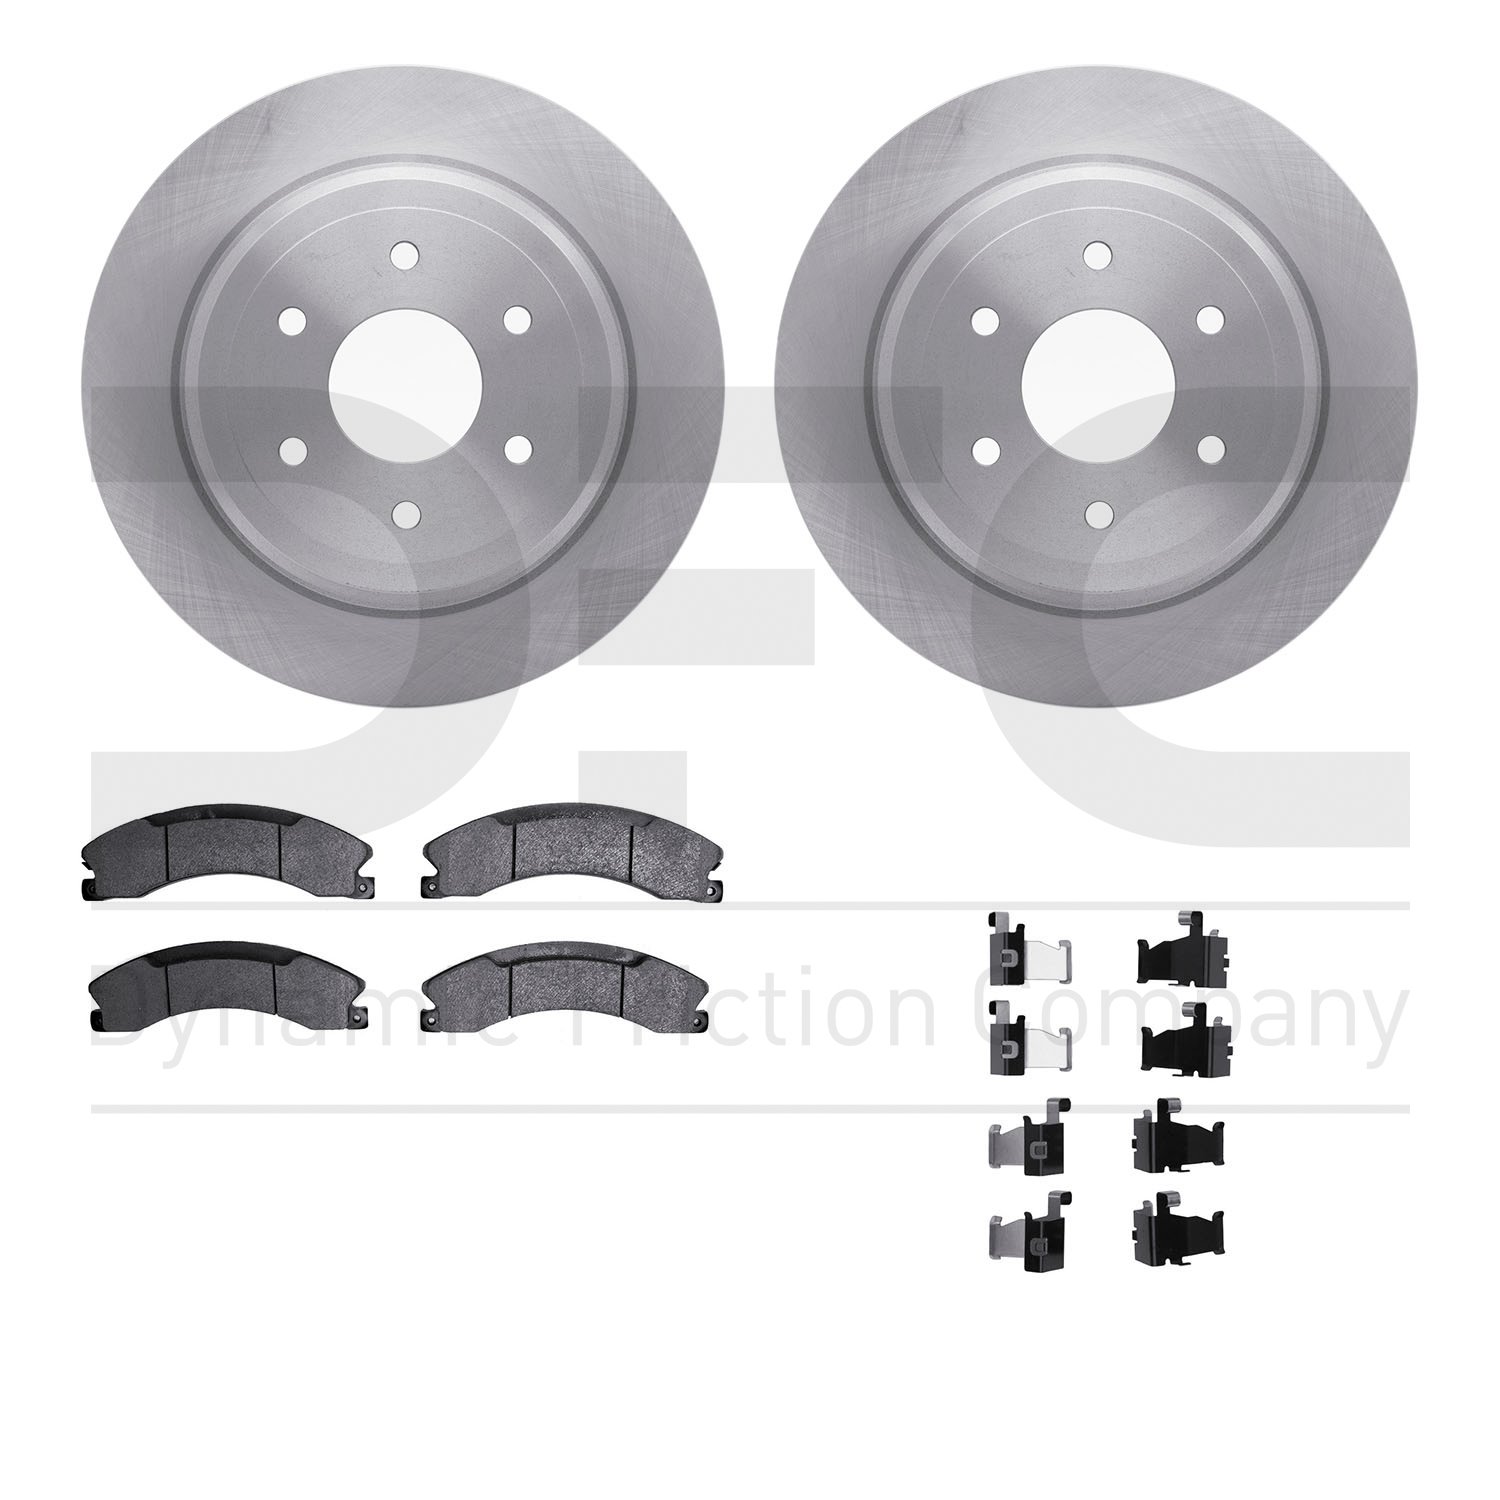 6412-67025 Brake Rotors with Ultimate-Duty Brake Pads Kit & Hardware, Fits Select Infiniti/Nissan, Position: Rear